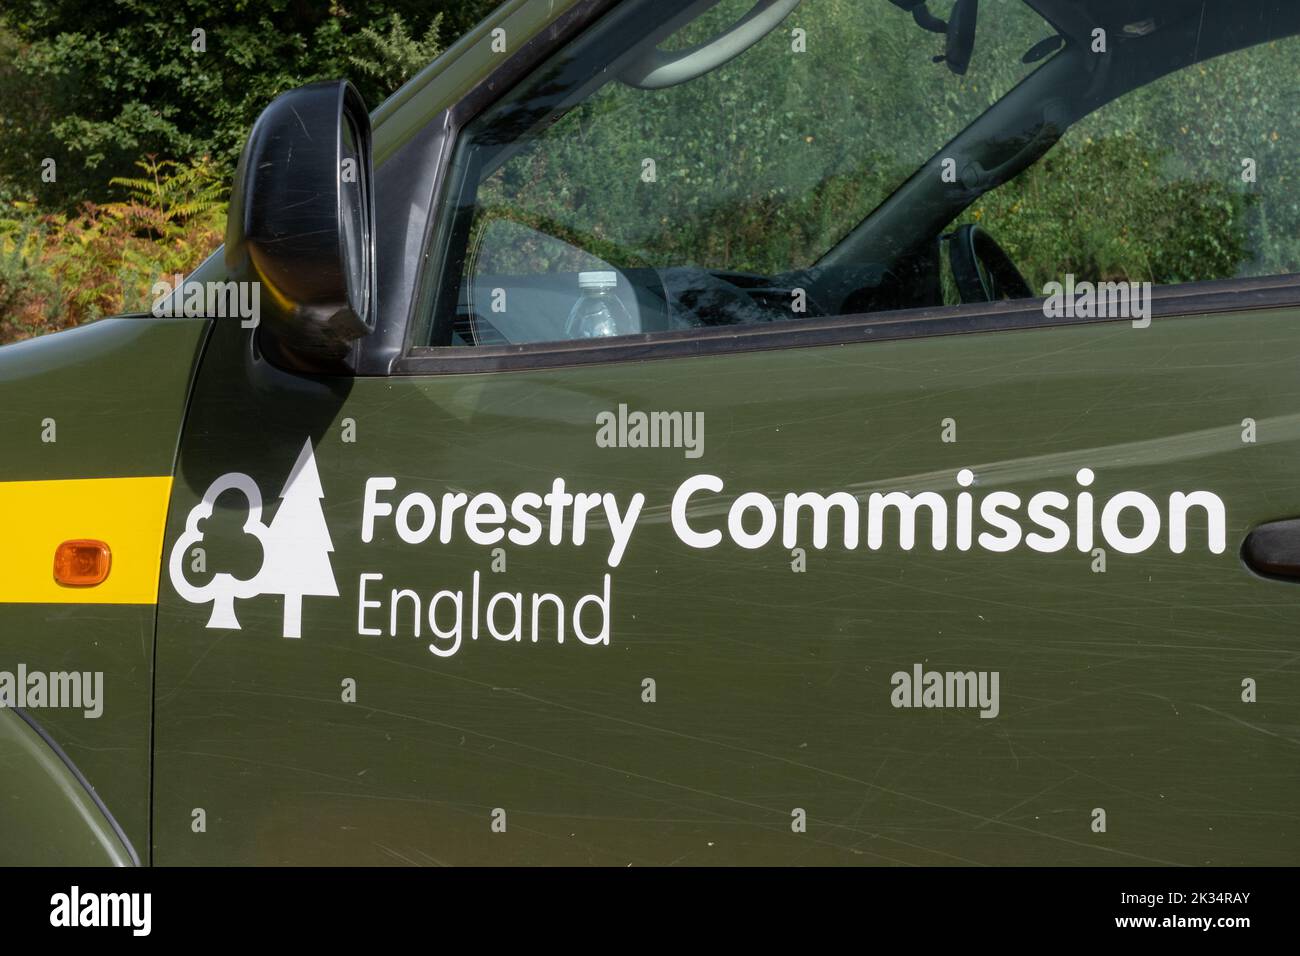 Logo Forestry Commission England sul veicolo pick-up in campagna, Inghilterra, Regno Unito Foto Stock